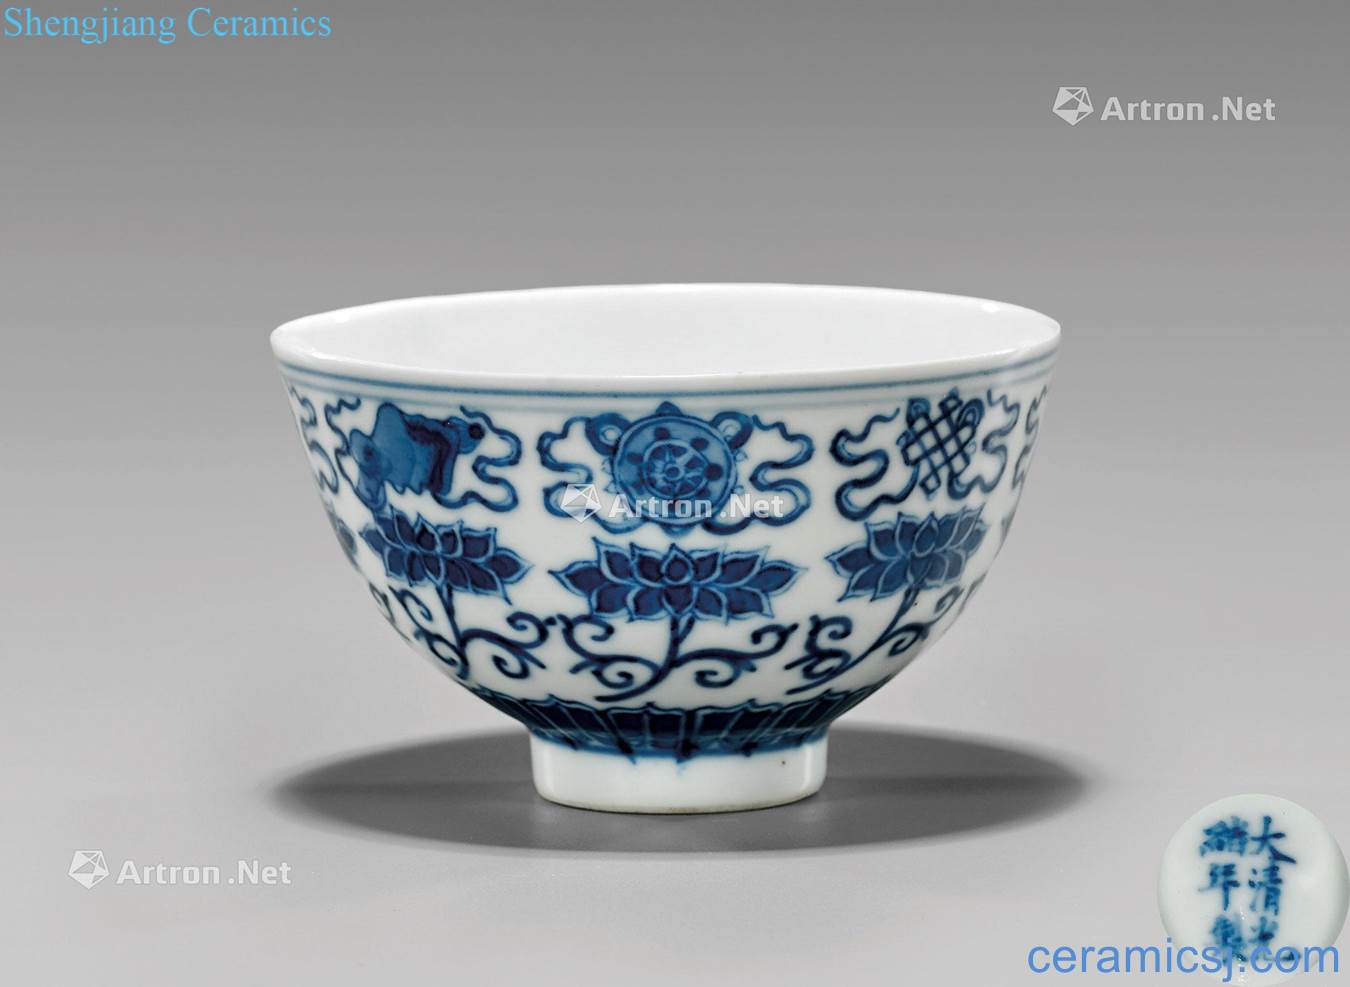 Guangxu dynasty porcelain teacup